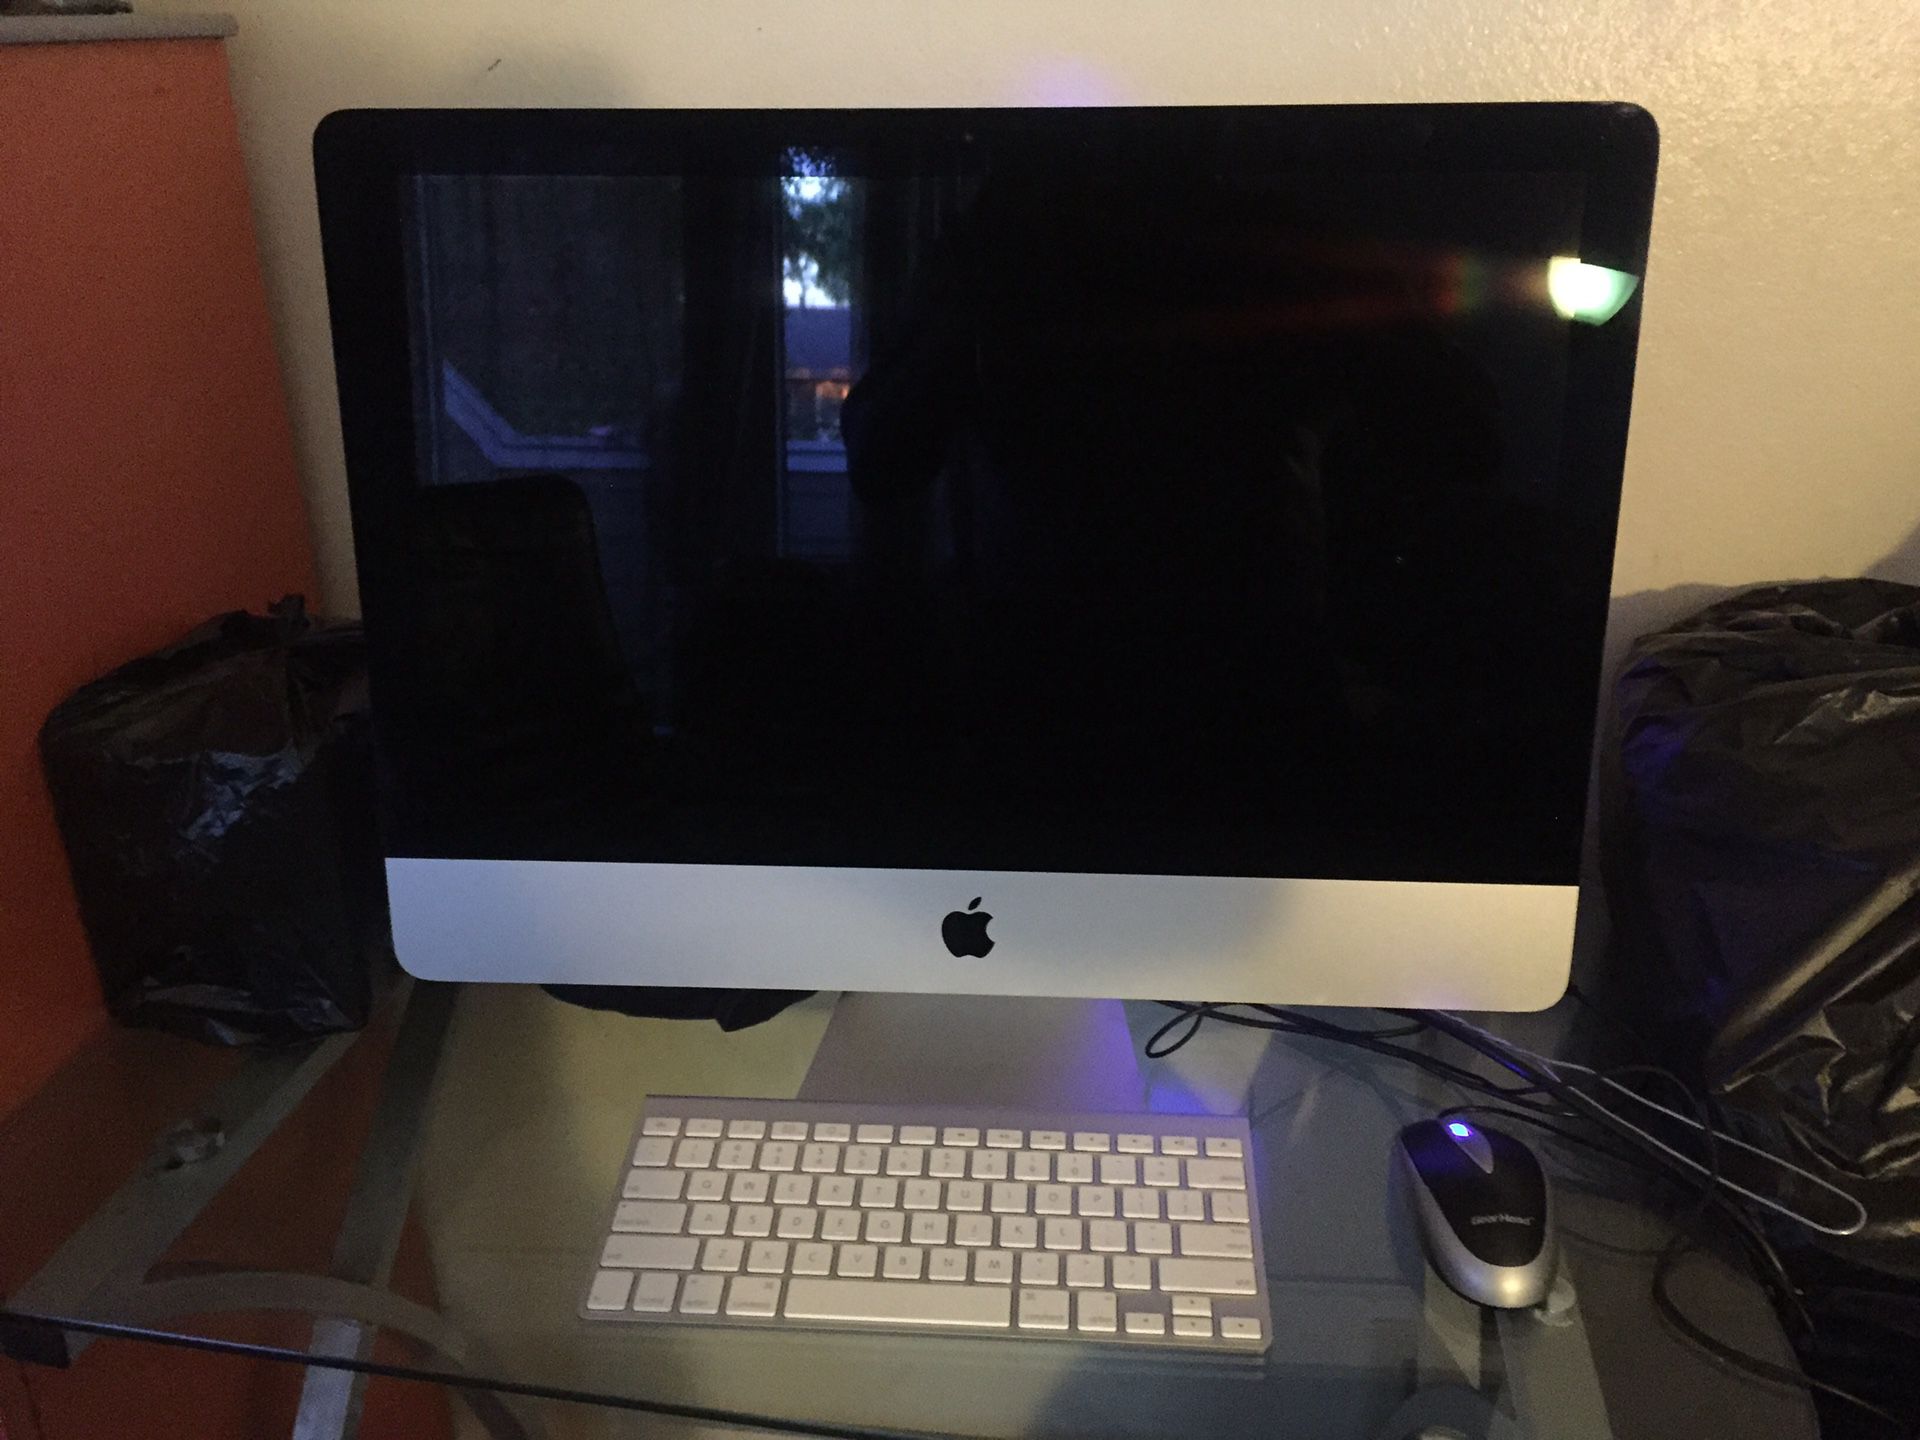 iMac 21.5” A1418